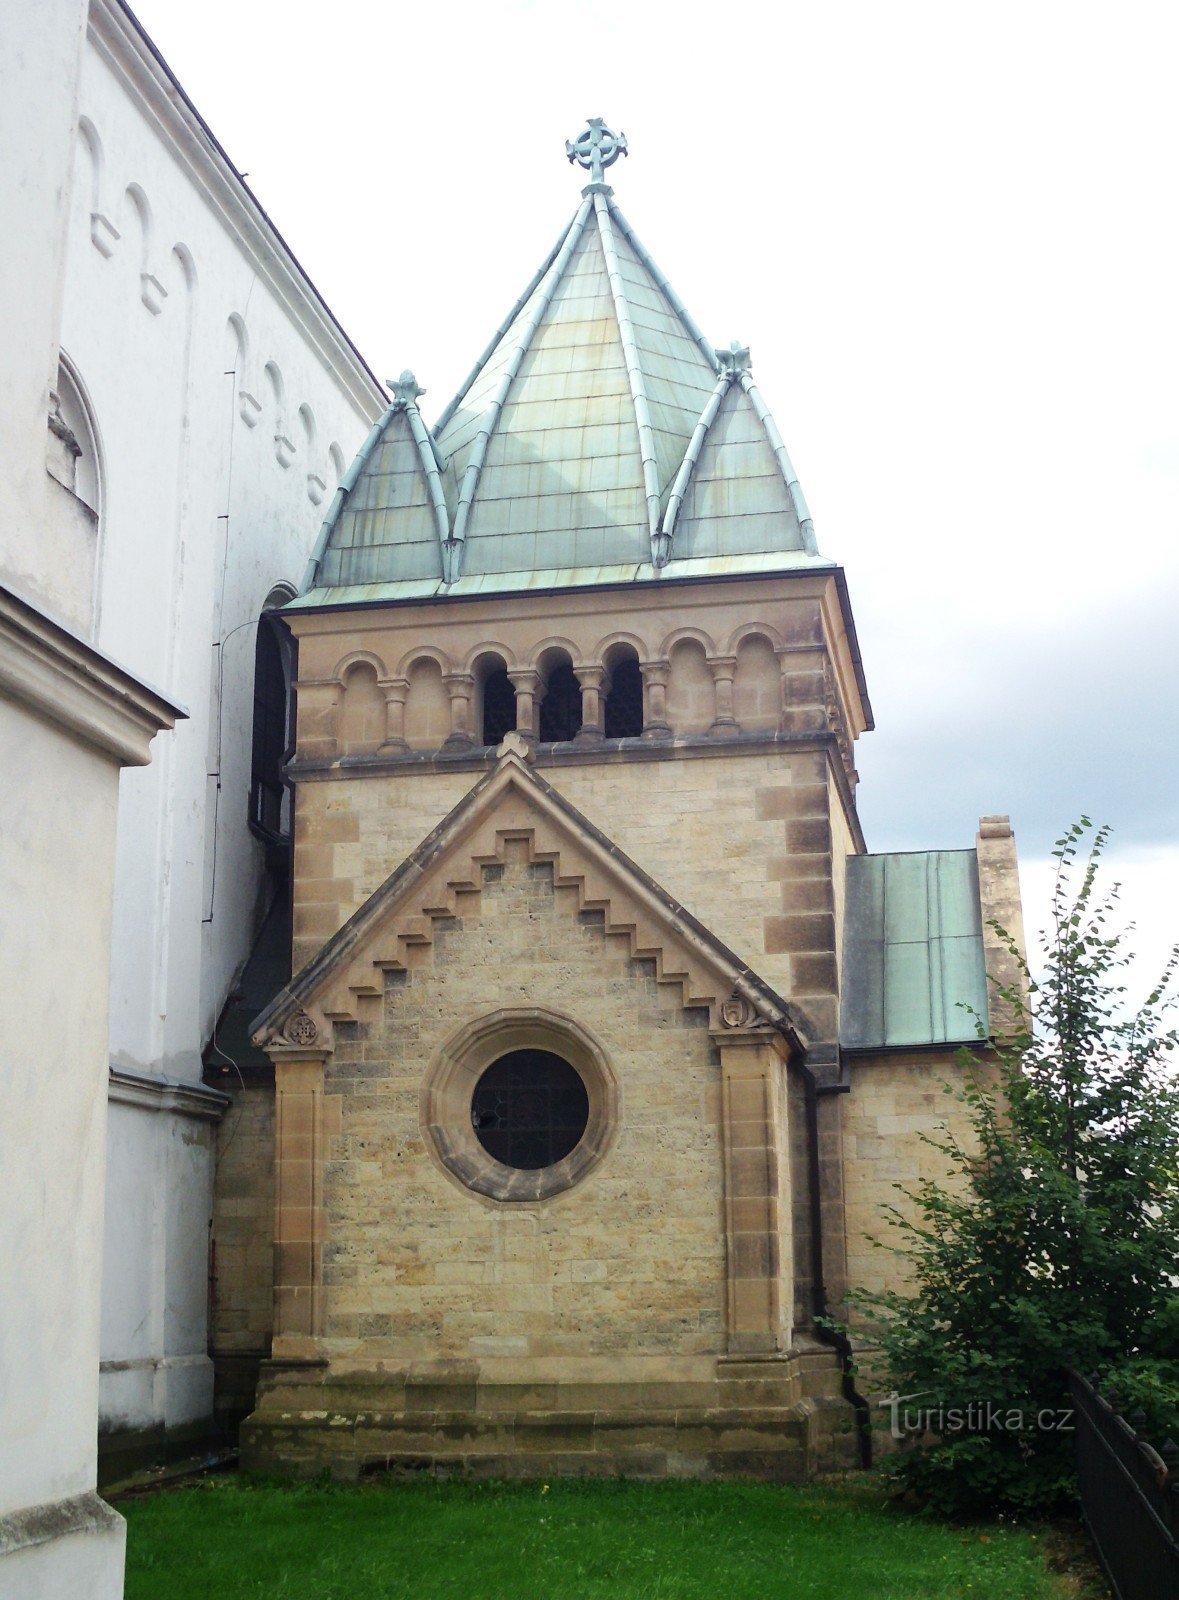 Čakovice (Praga) - Biserica Sf. Remigia